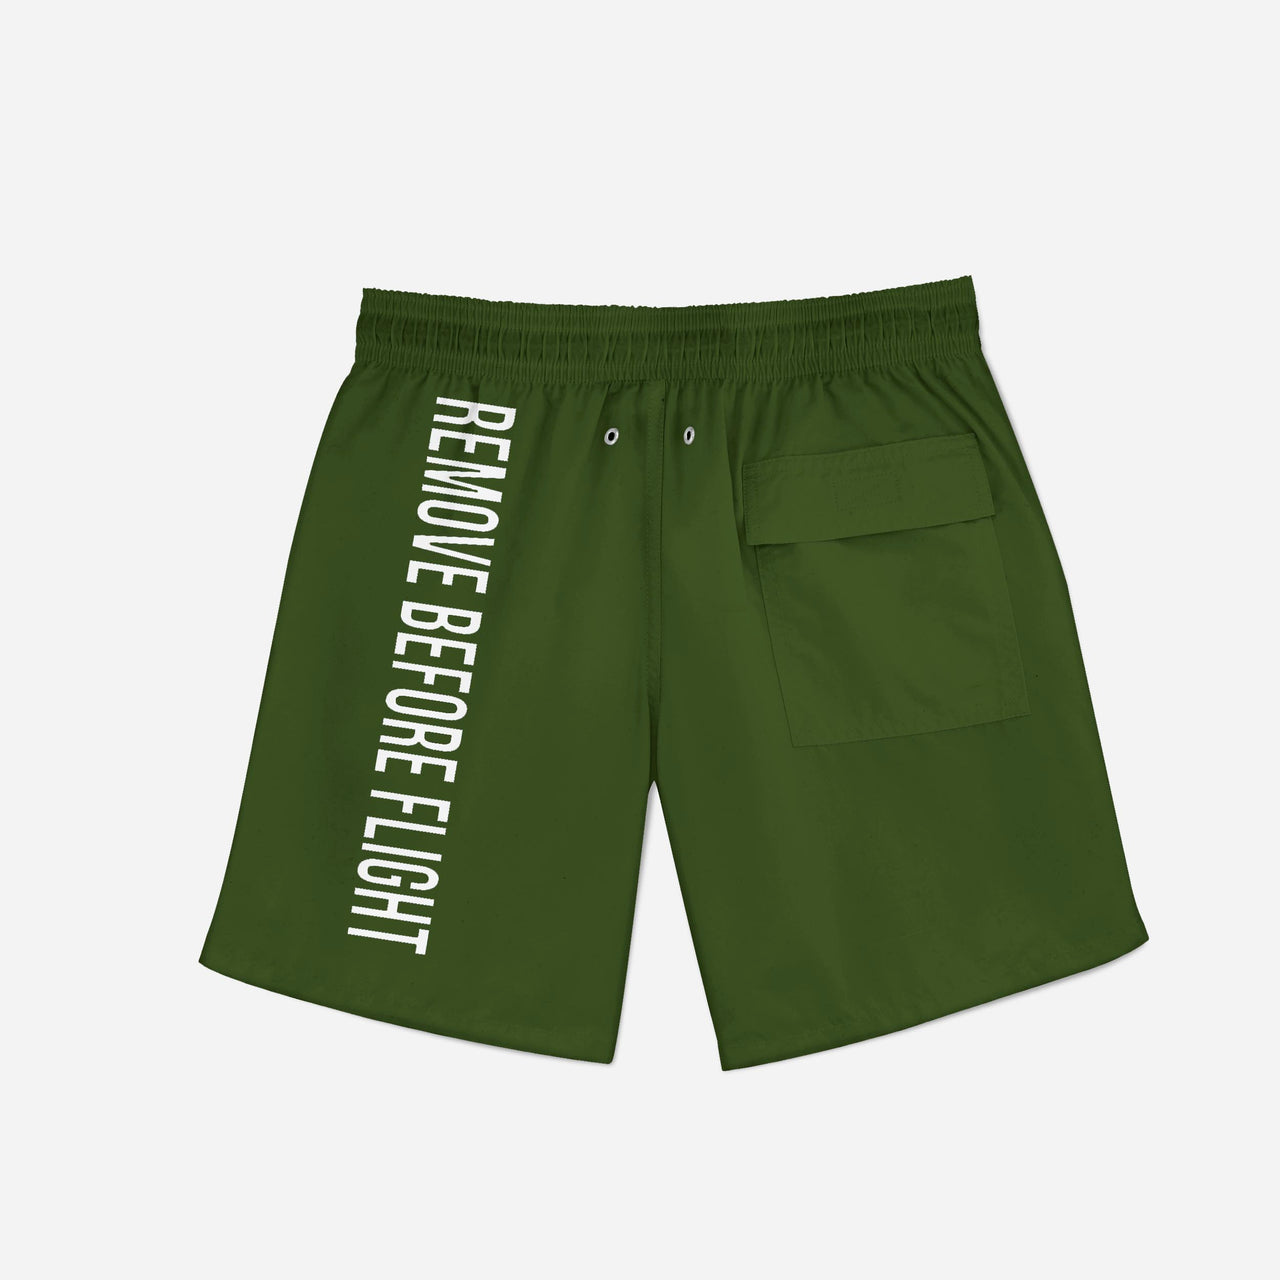 Remove Before Flight 2 (Green) Swim Trunks & Shorts